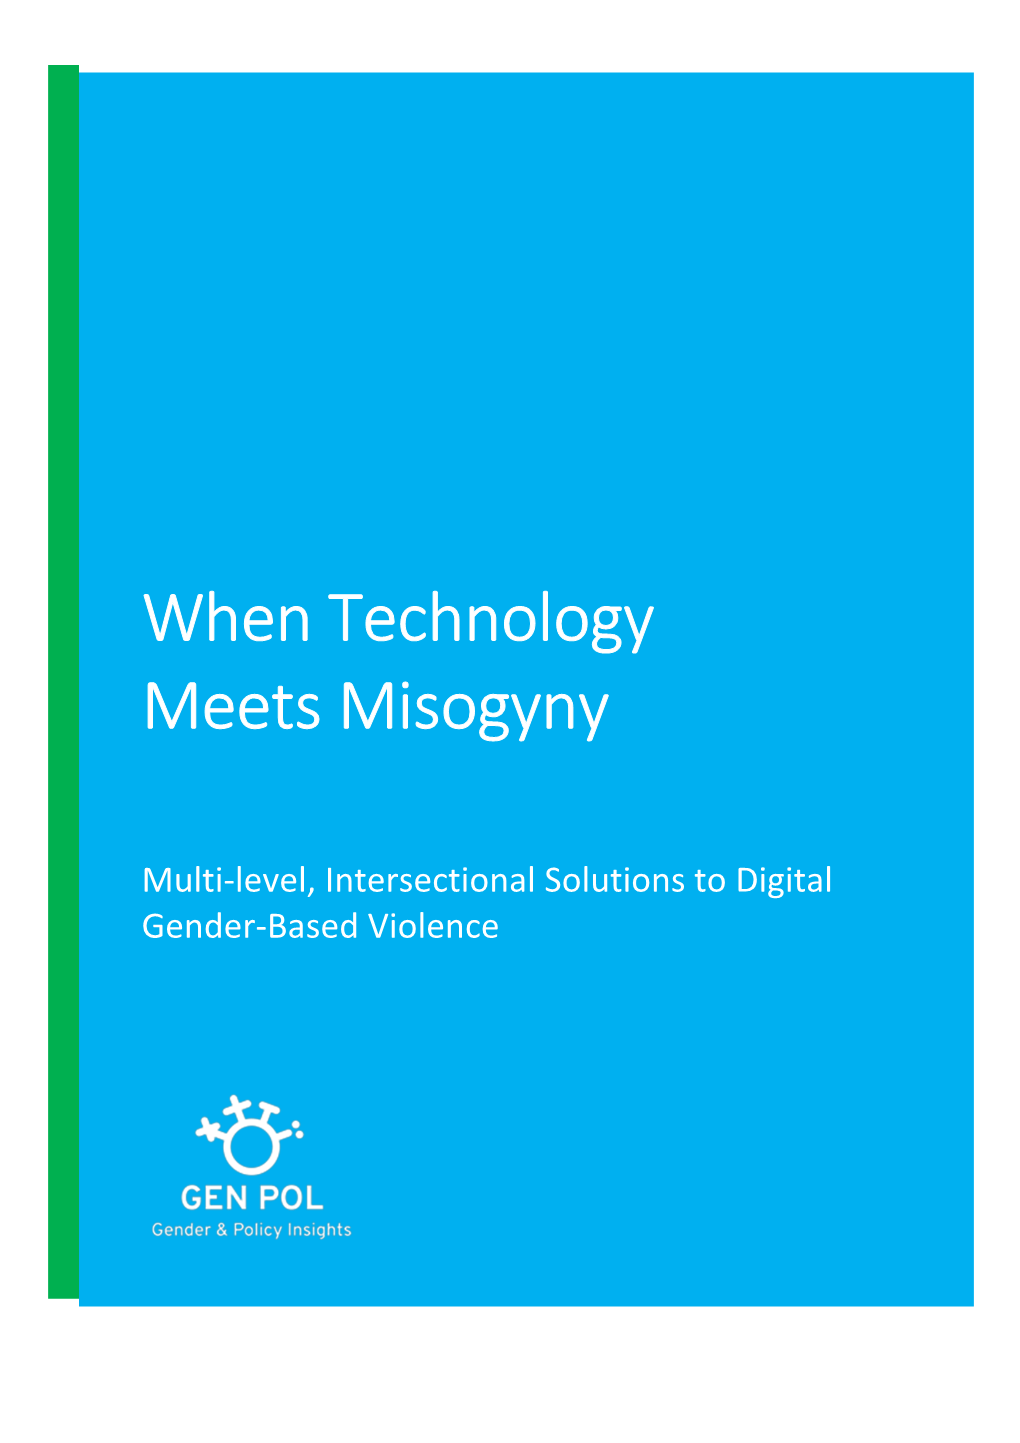 When Technology Meets Misogyny